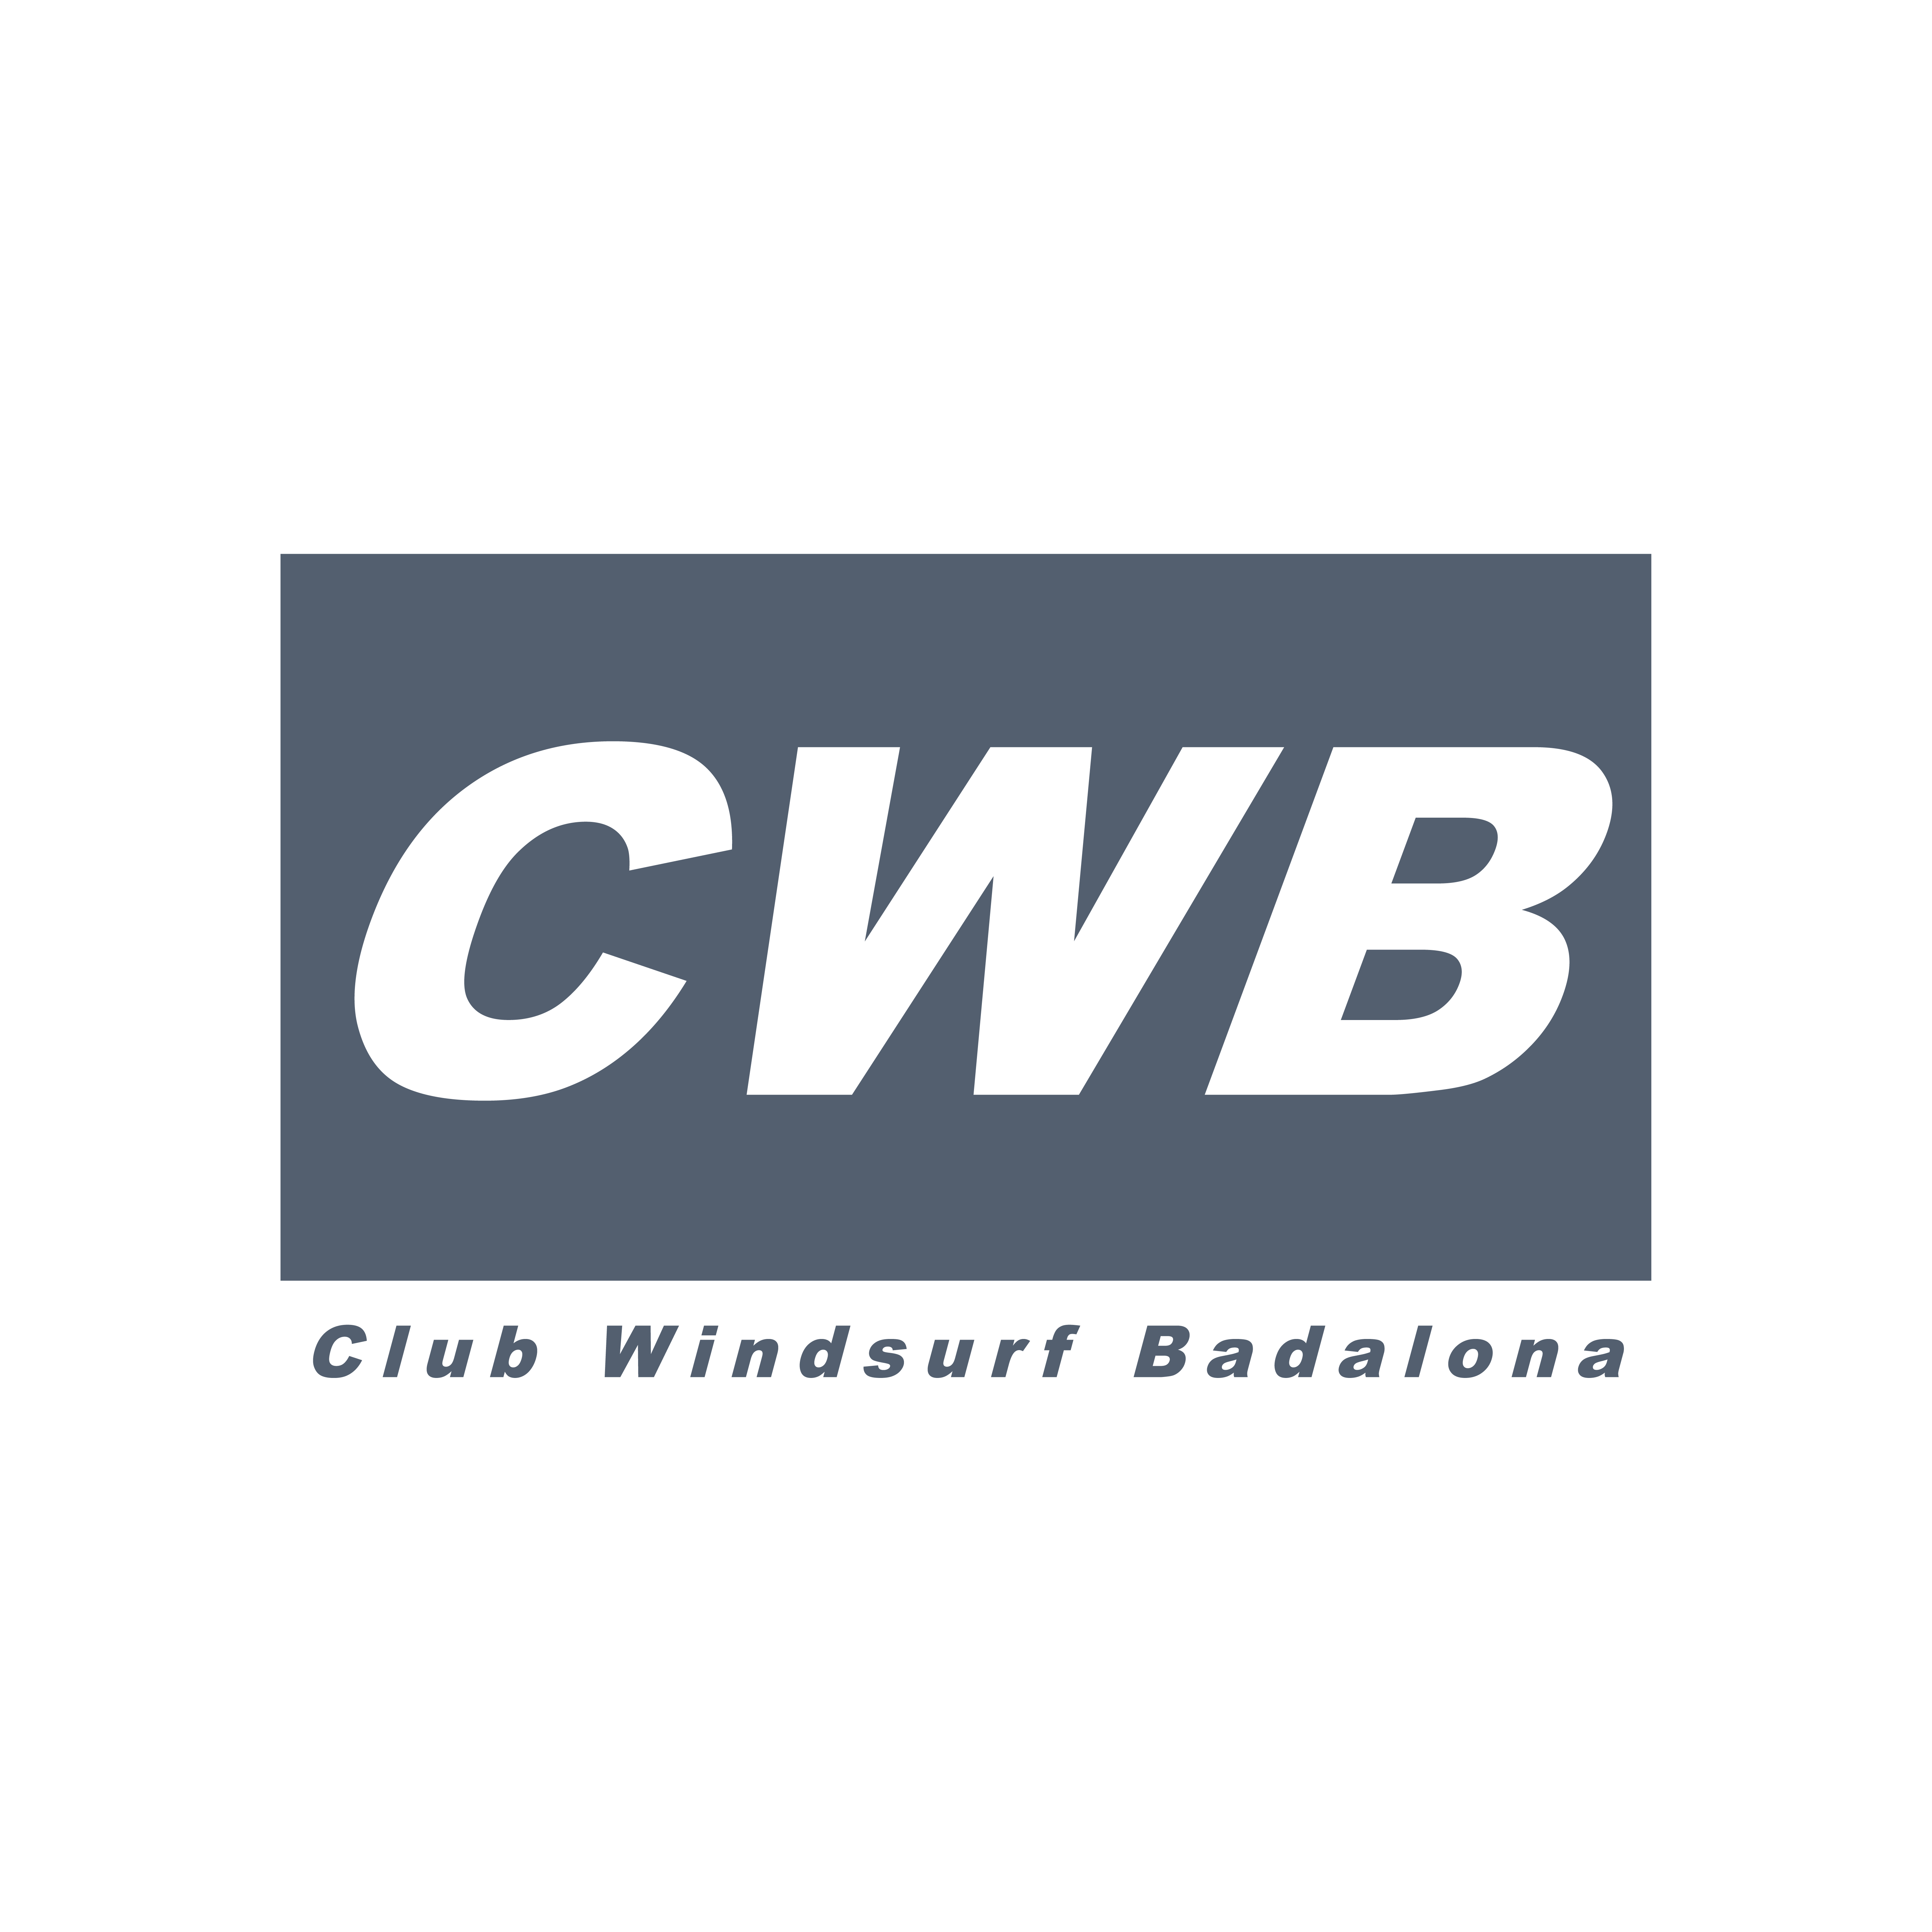 BADALONA, CLUB WINDSURF